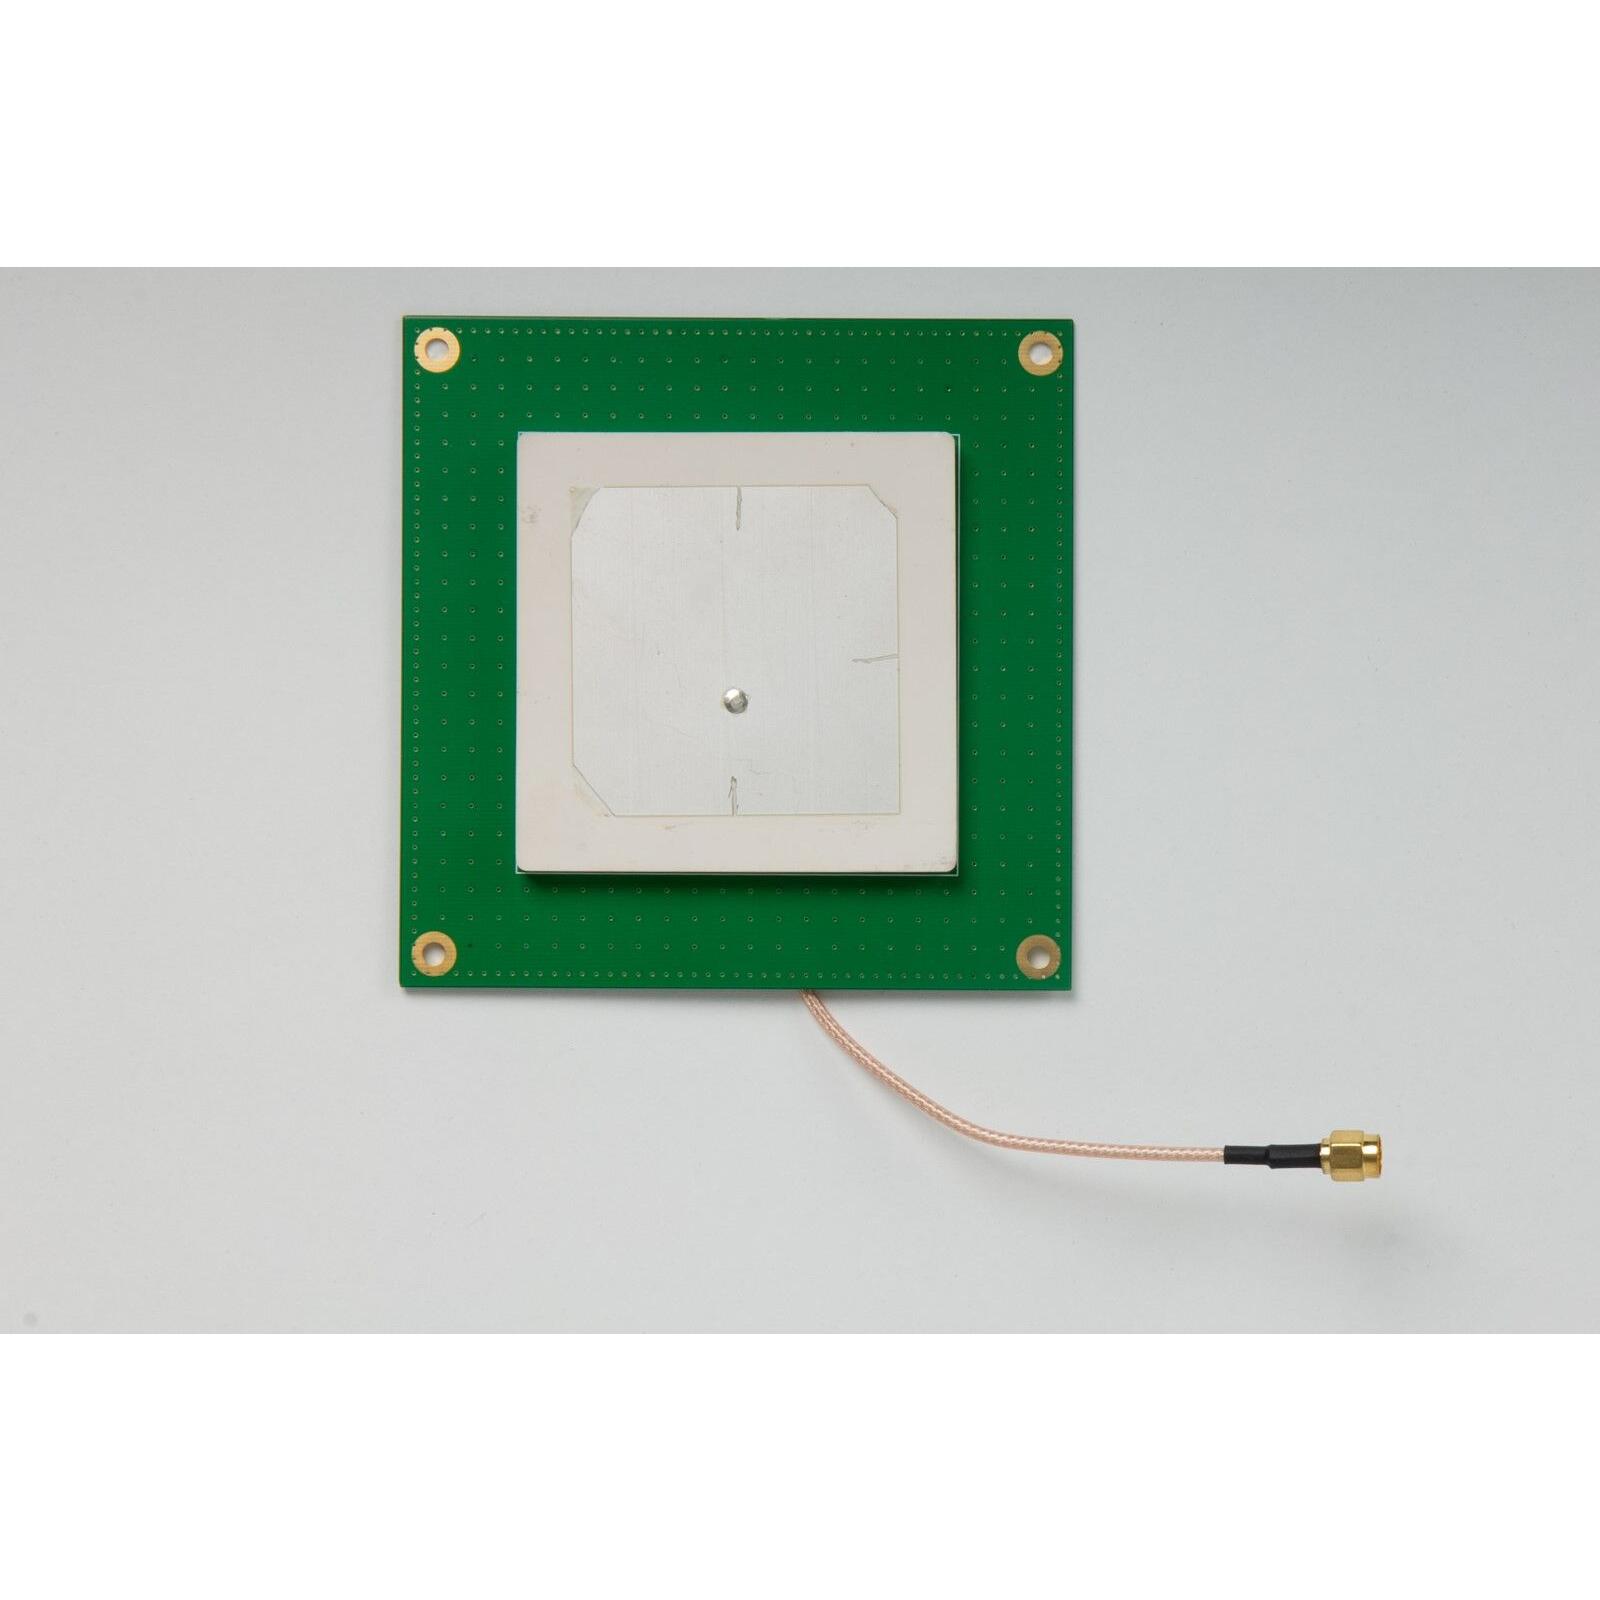 Tss Company D78120 - UHF RFID patch antenna